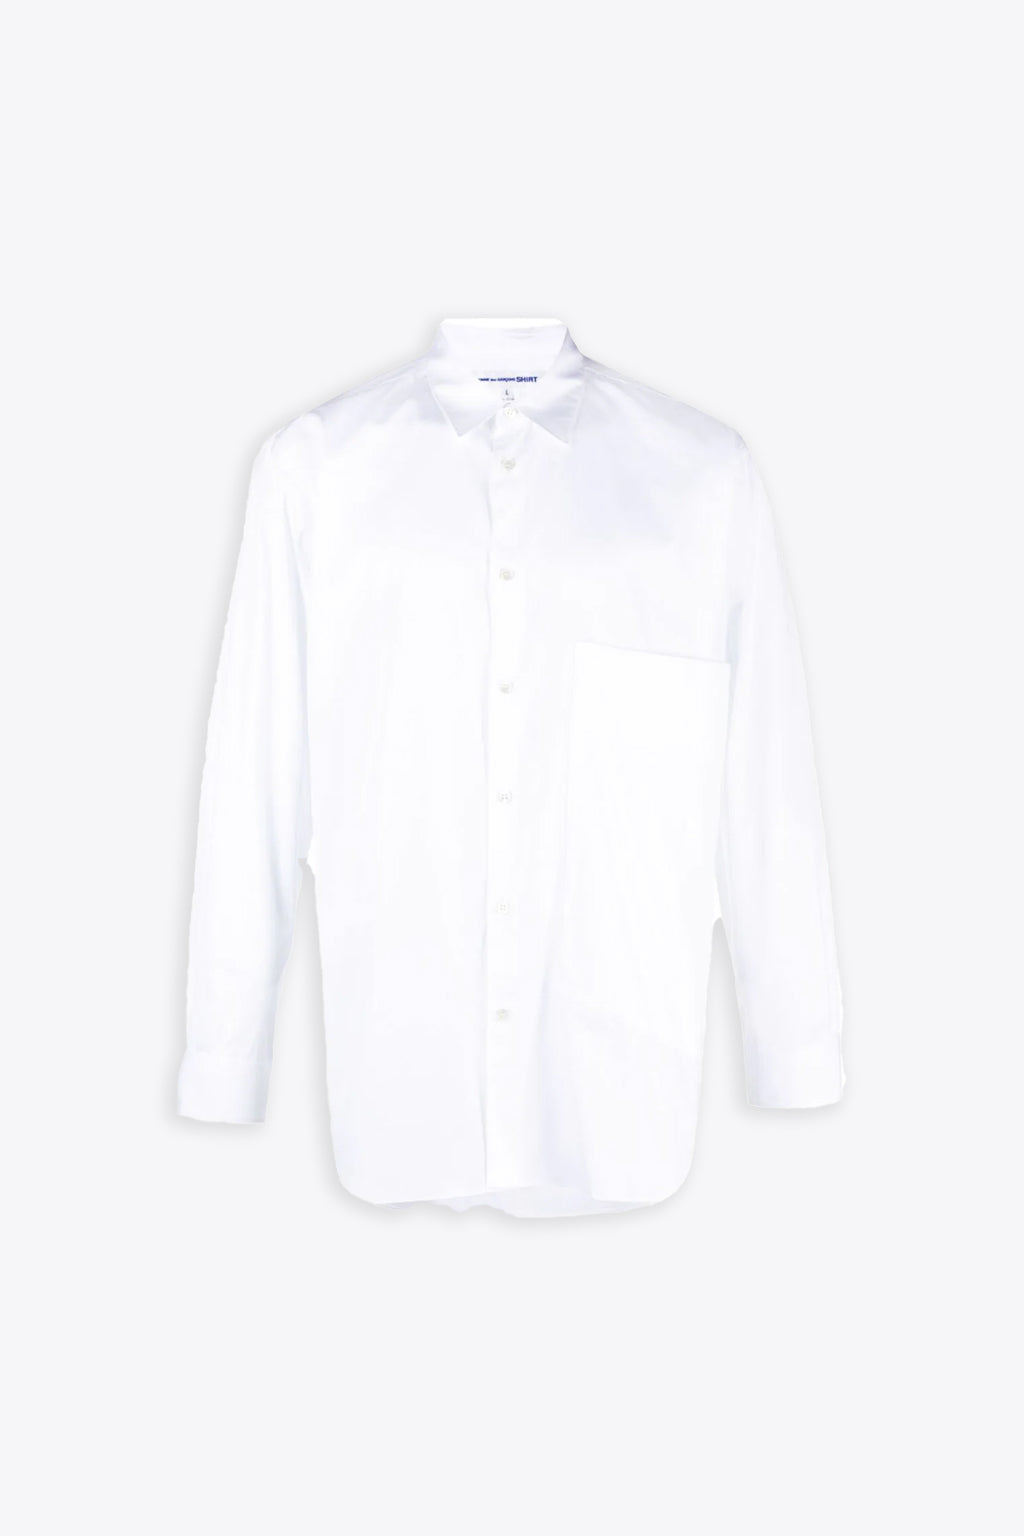 alt-image__White-cotton-shirt-with-maxi-front-pocket